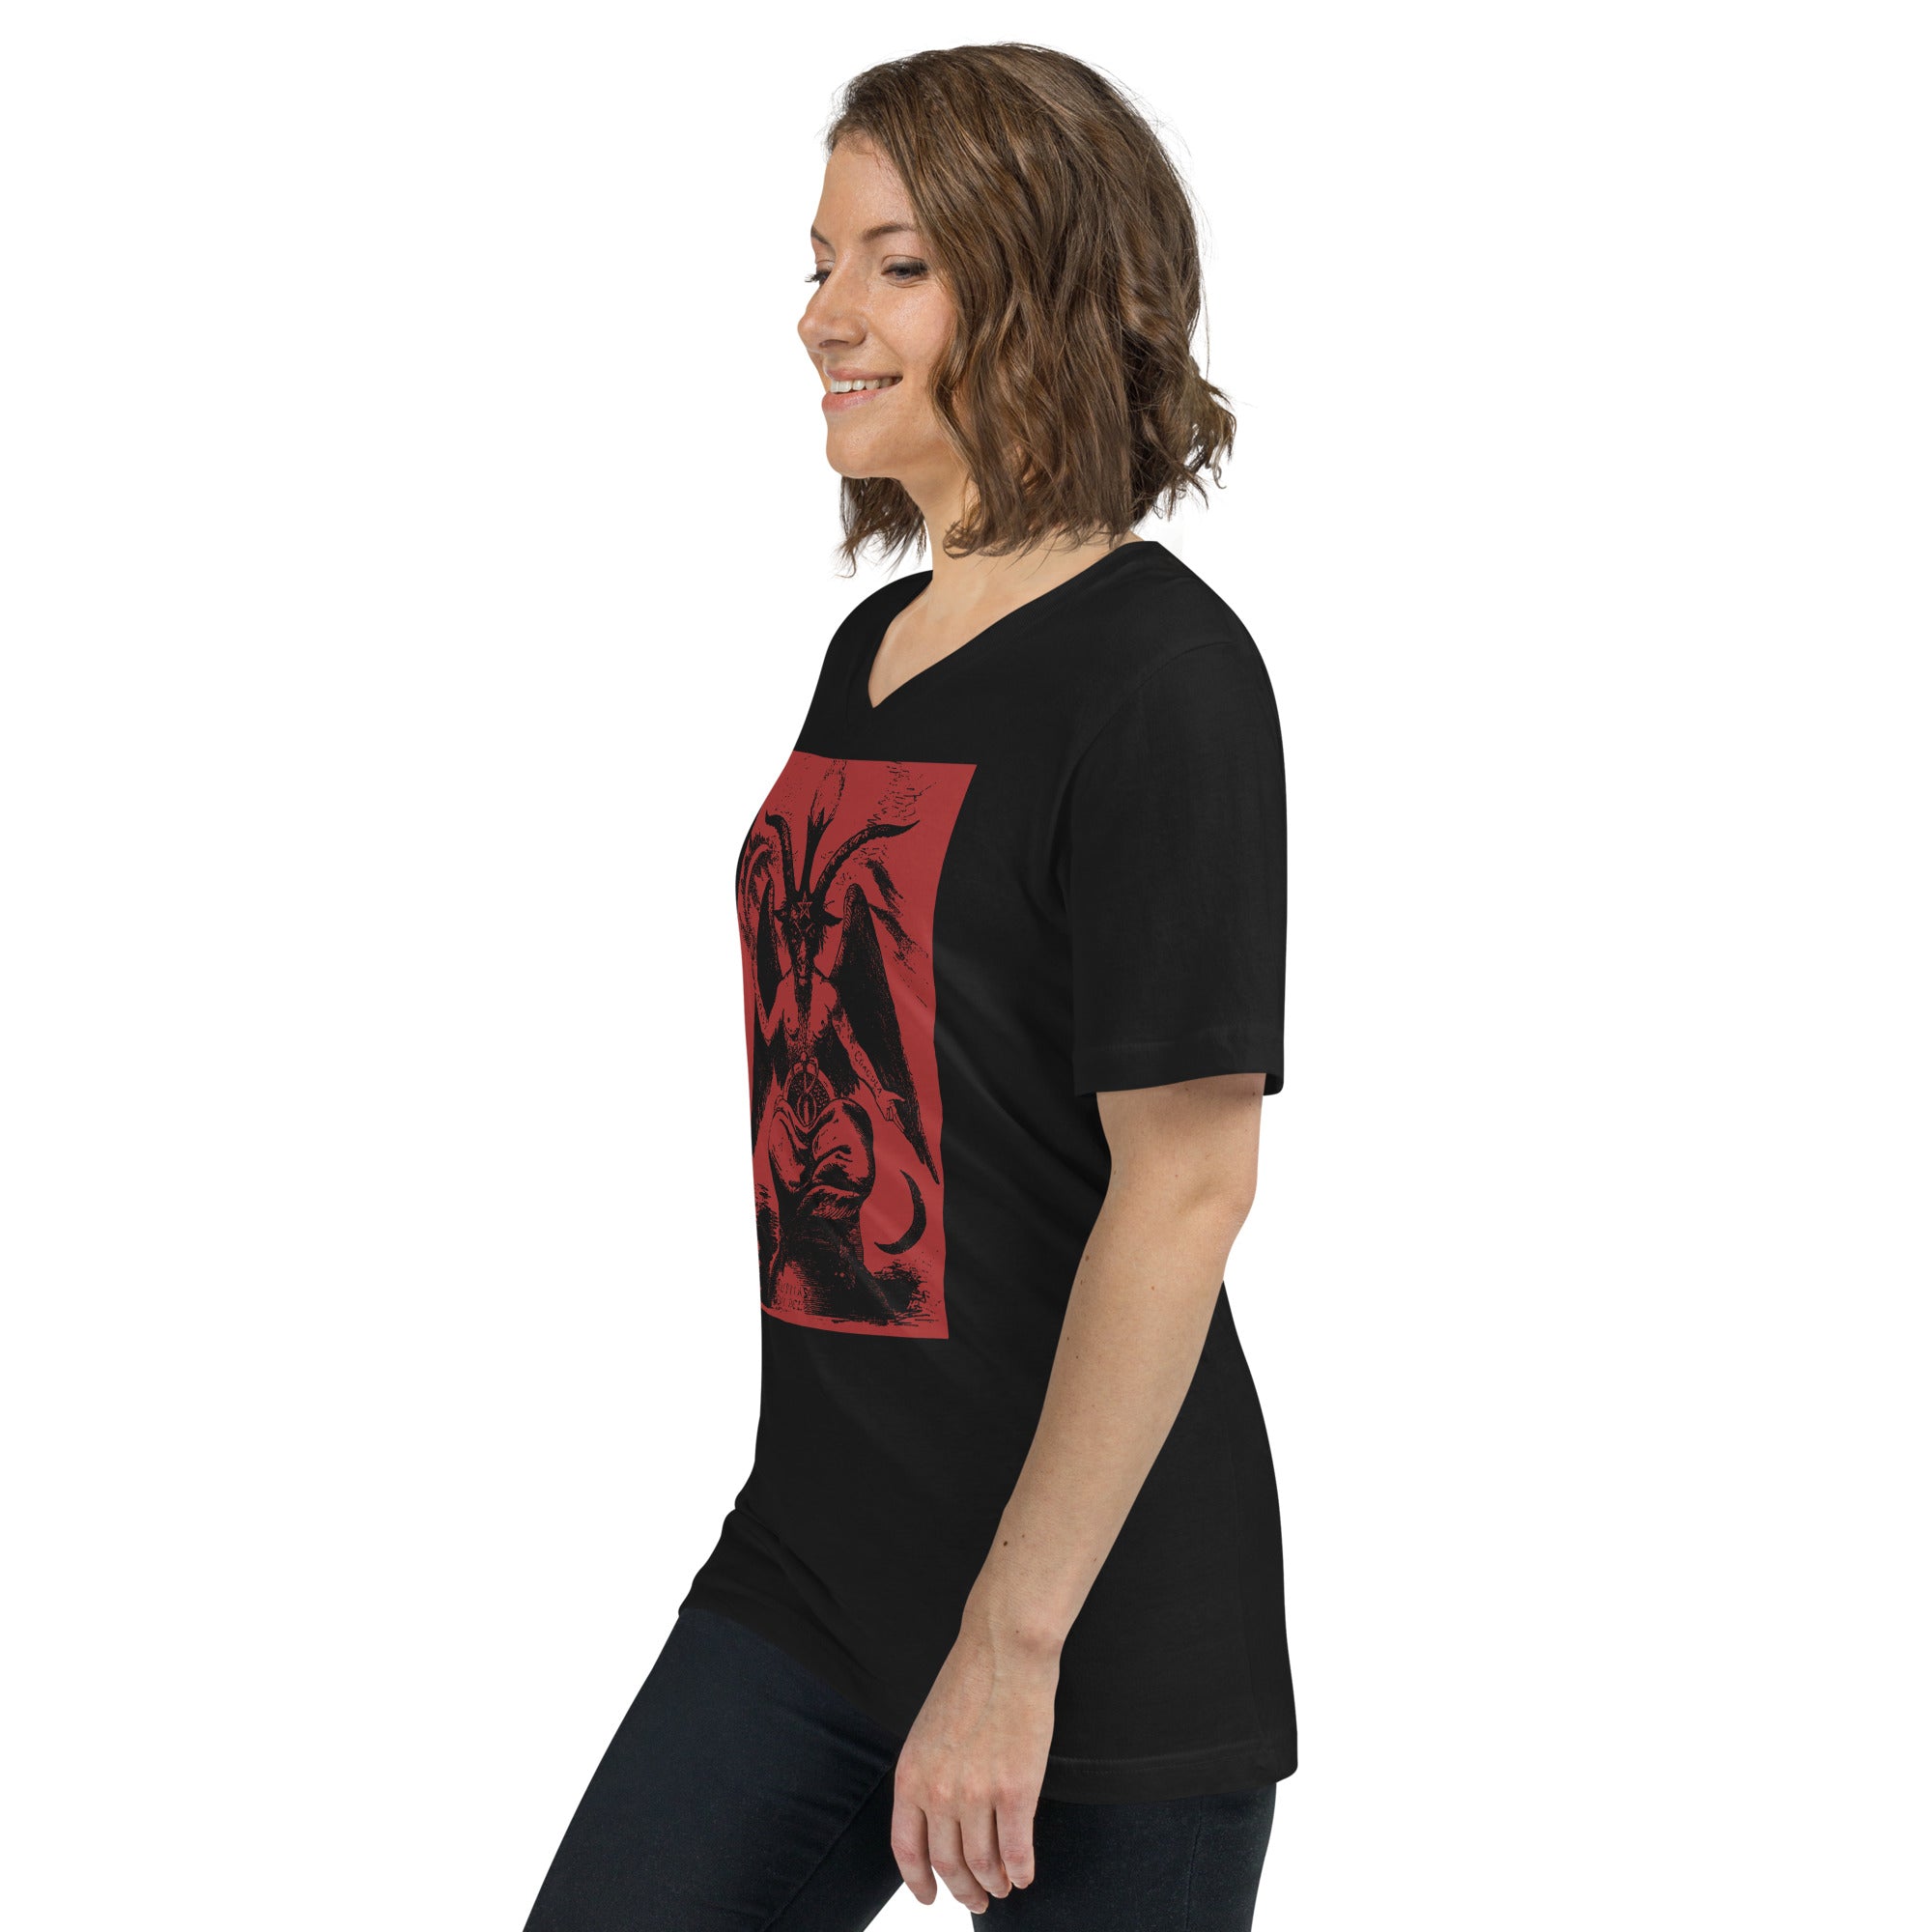 Original Baphomet Éliphas Lévi Drawing Women's Short Sleeve V-Neck T-Shirt Red Print - Edge of Life Designs